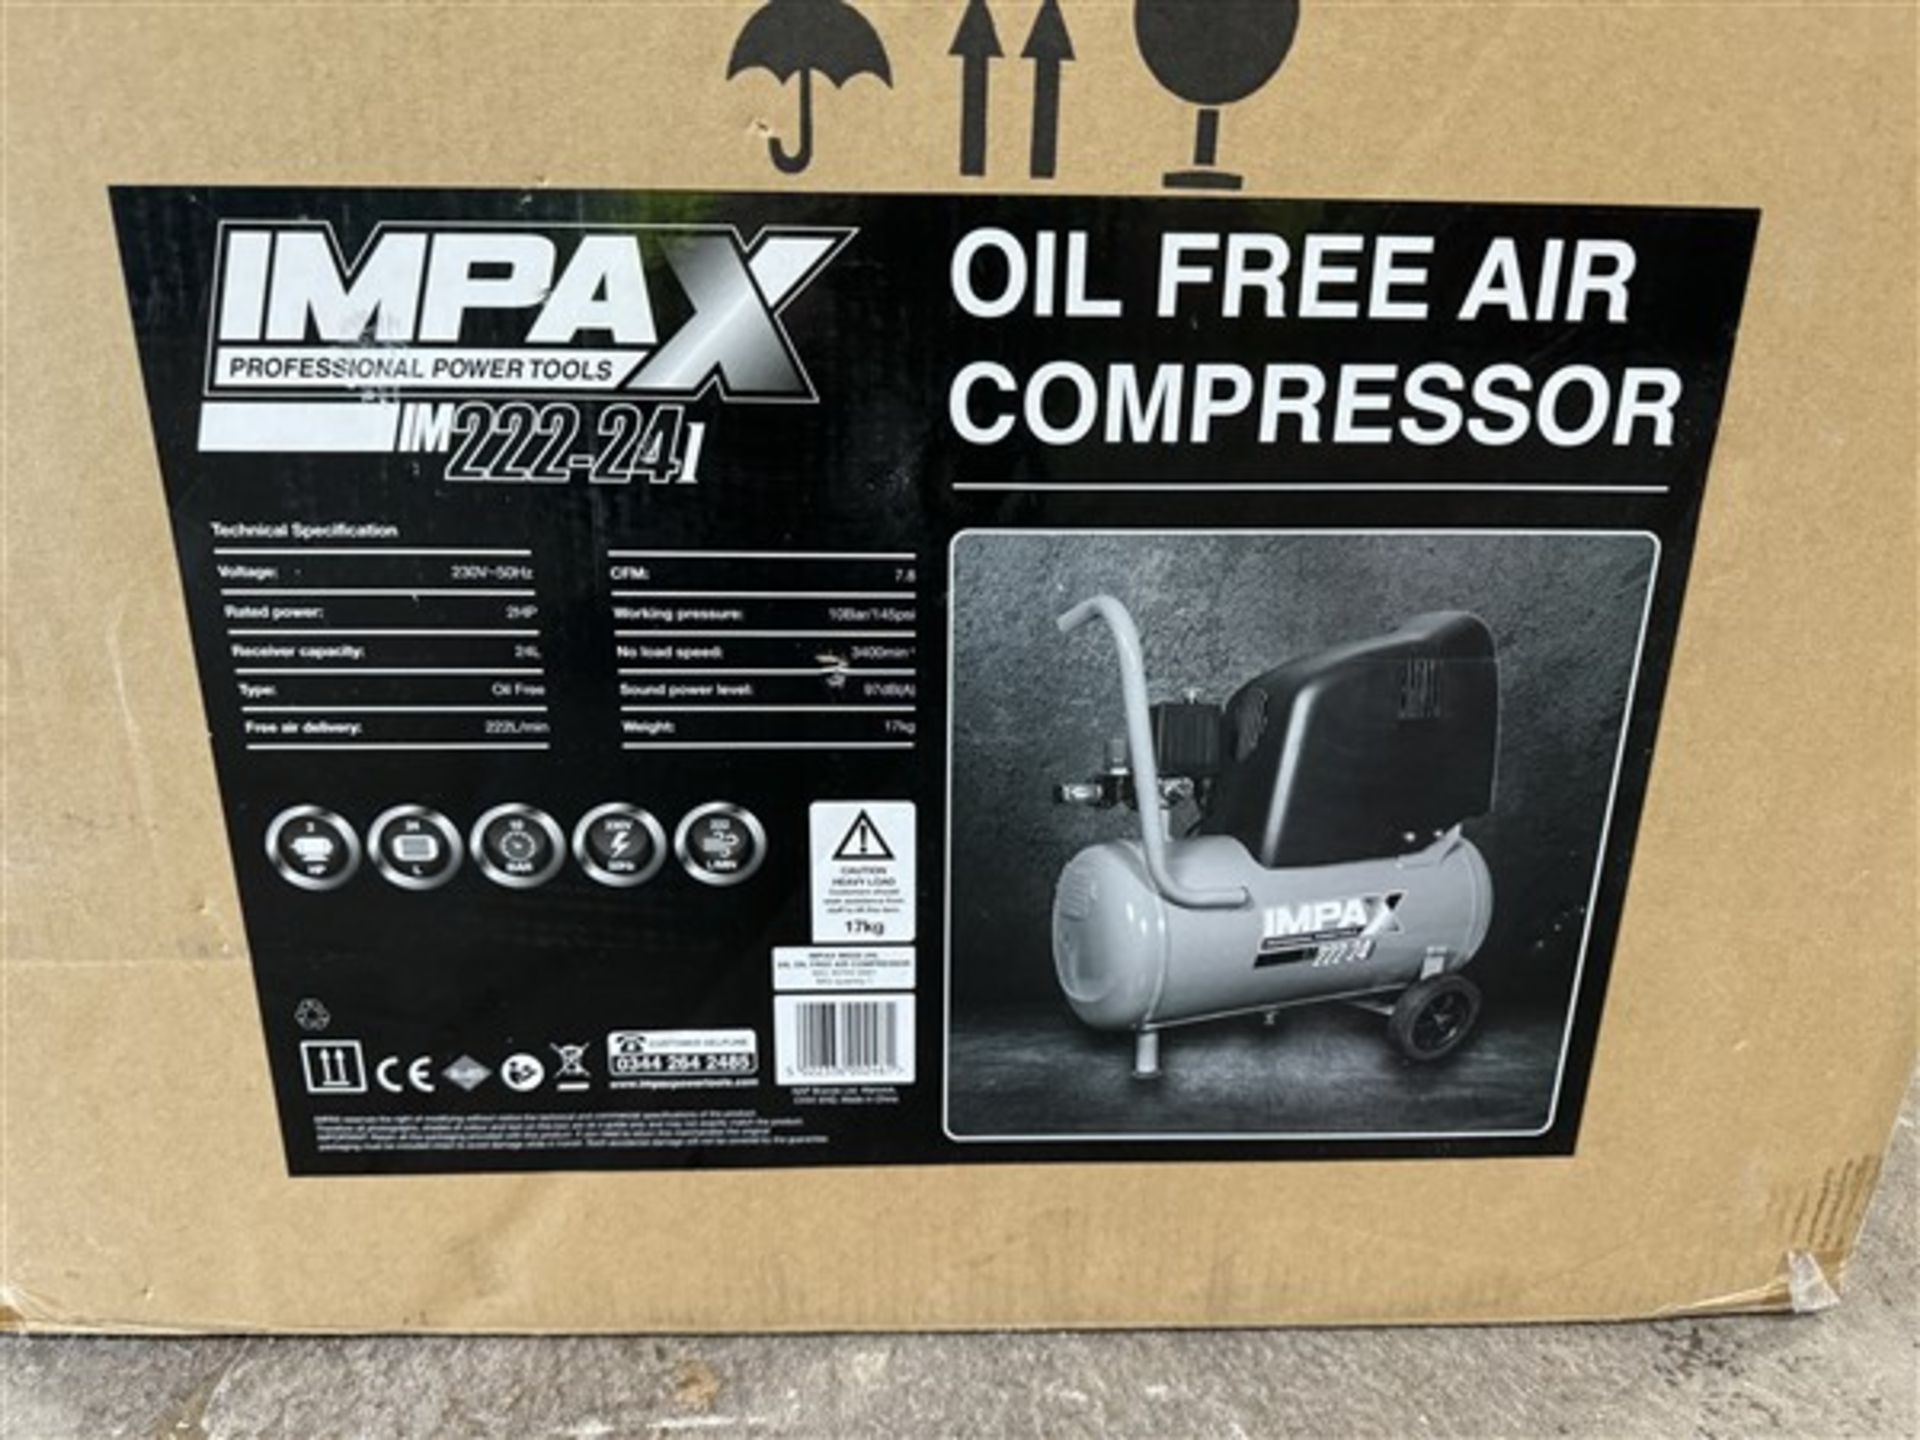 Impax 230v 24L oil free air compressor (boxed), model IM222-24L - Image 2 of 3